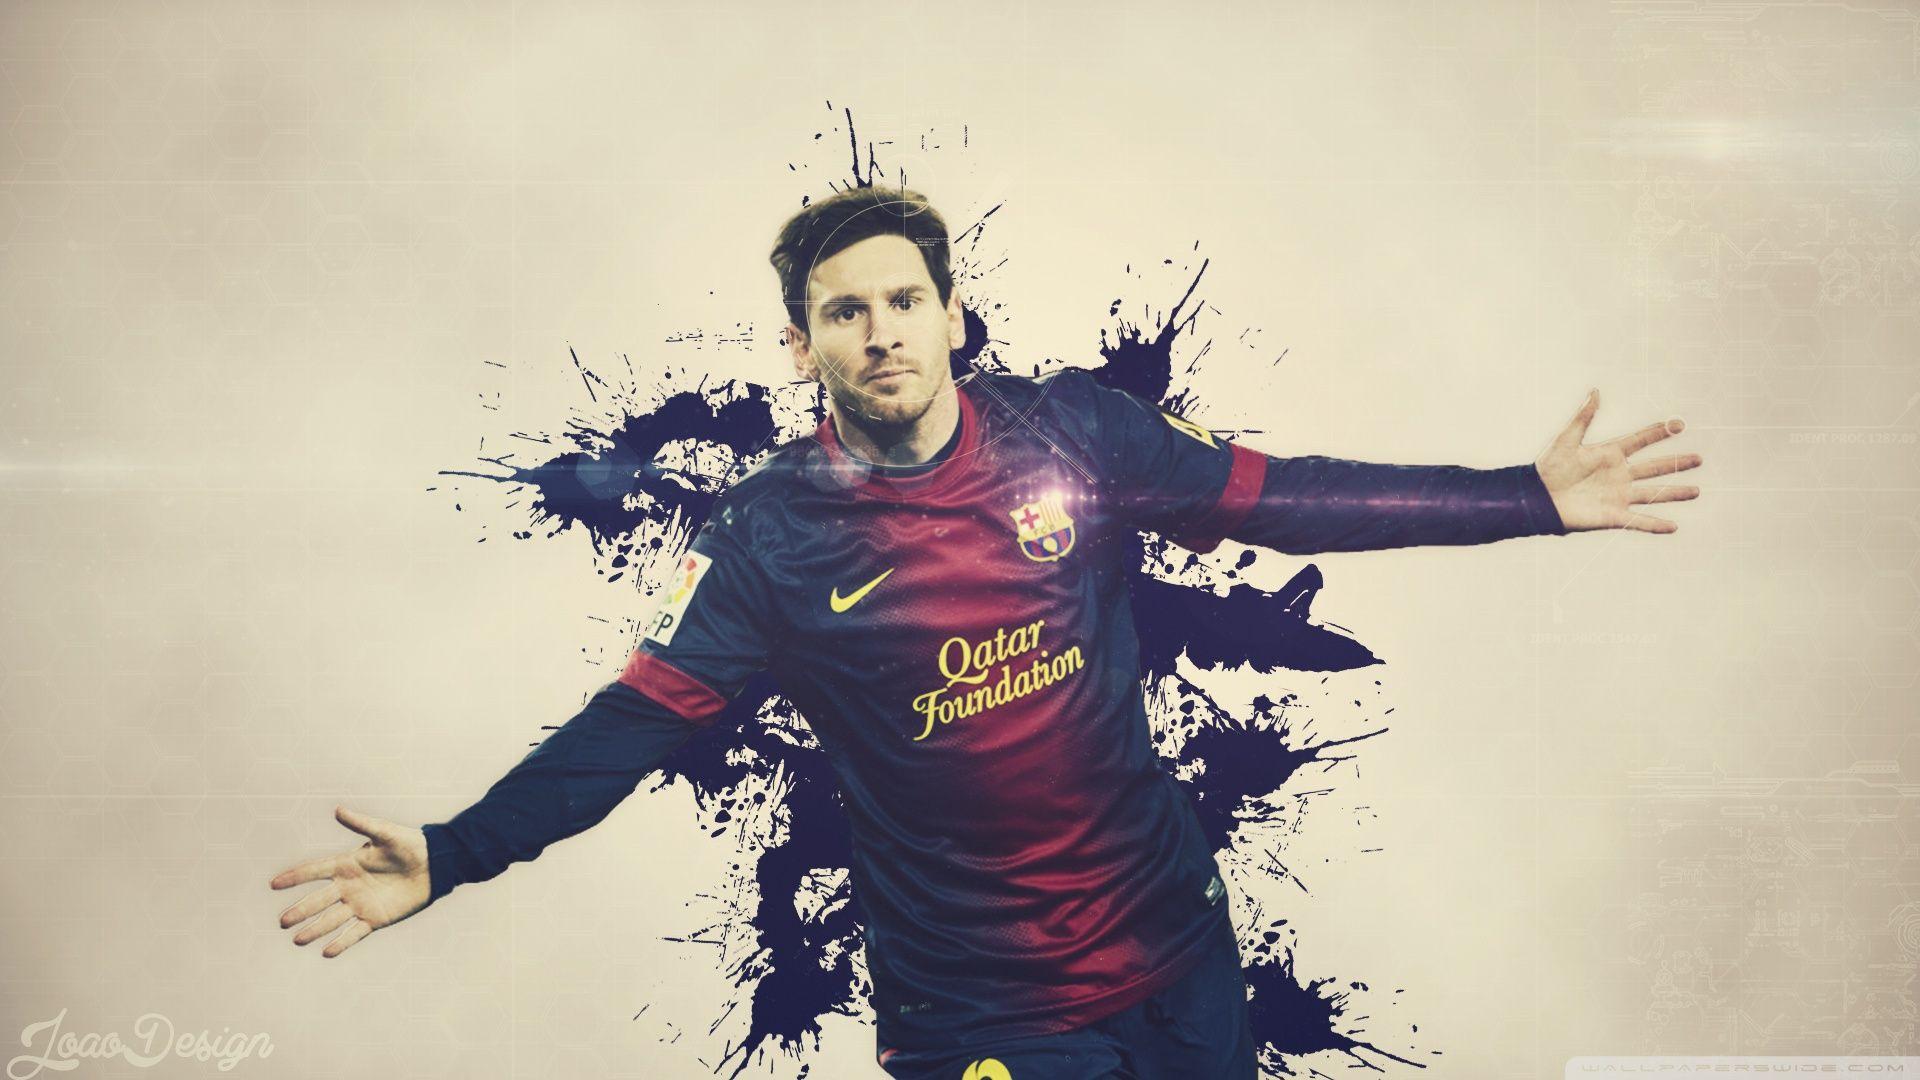 Lionel Messi By JoaoDesign HD desktop wallpaper, High Definition